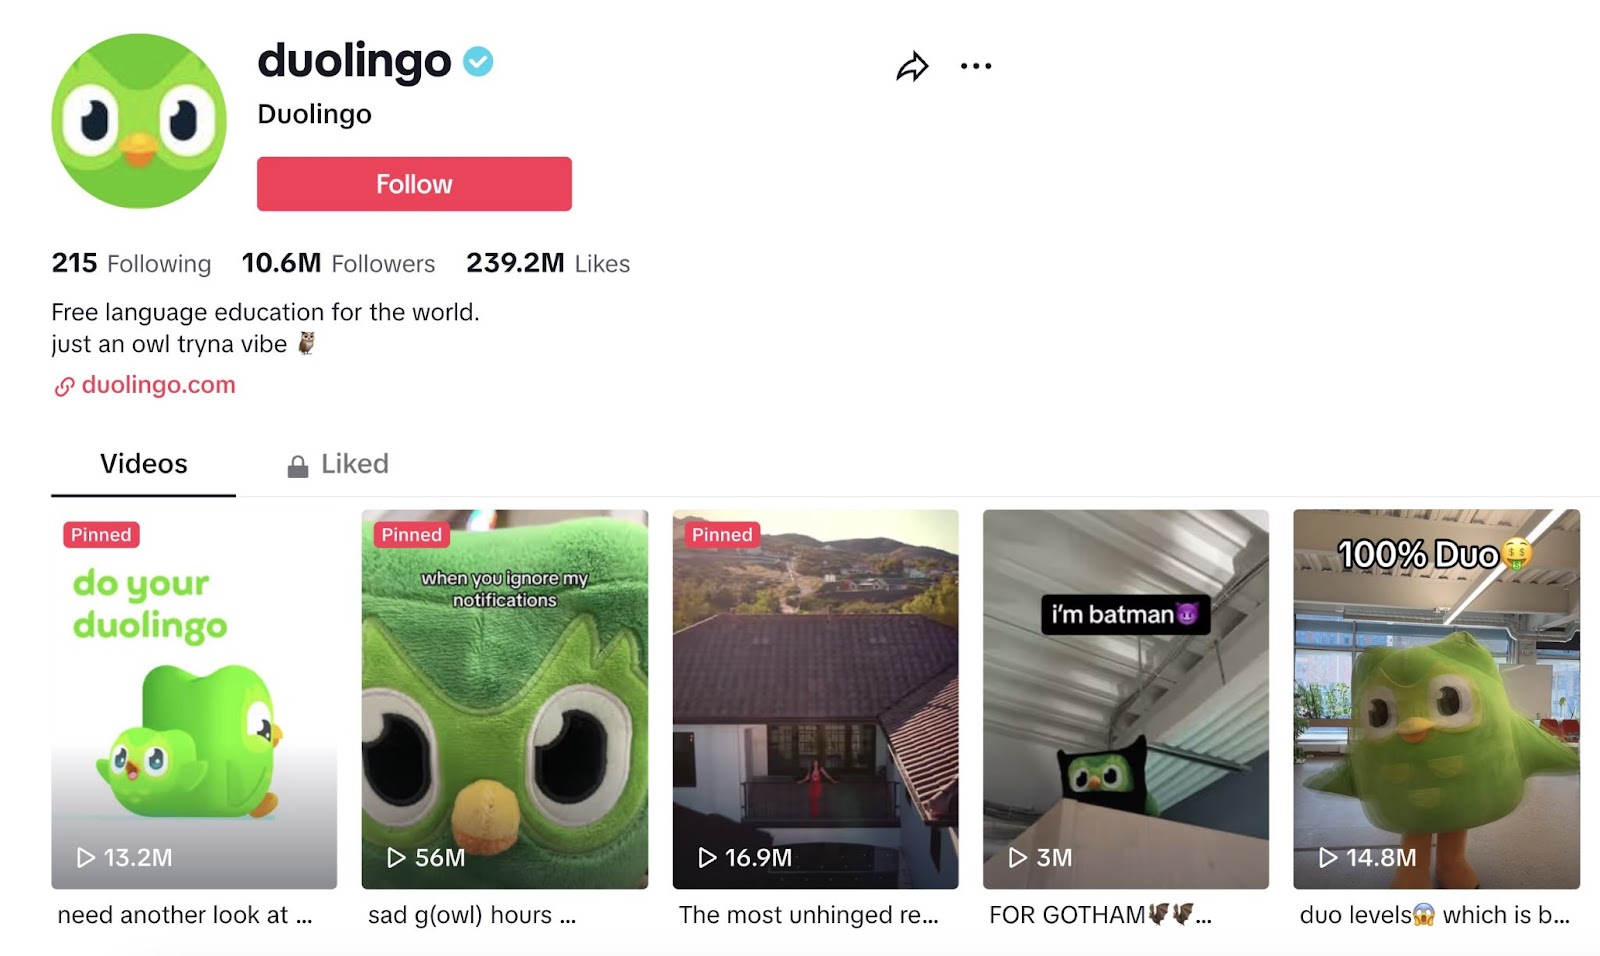 Duolingo's profile on TikTok